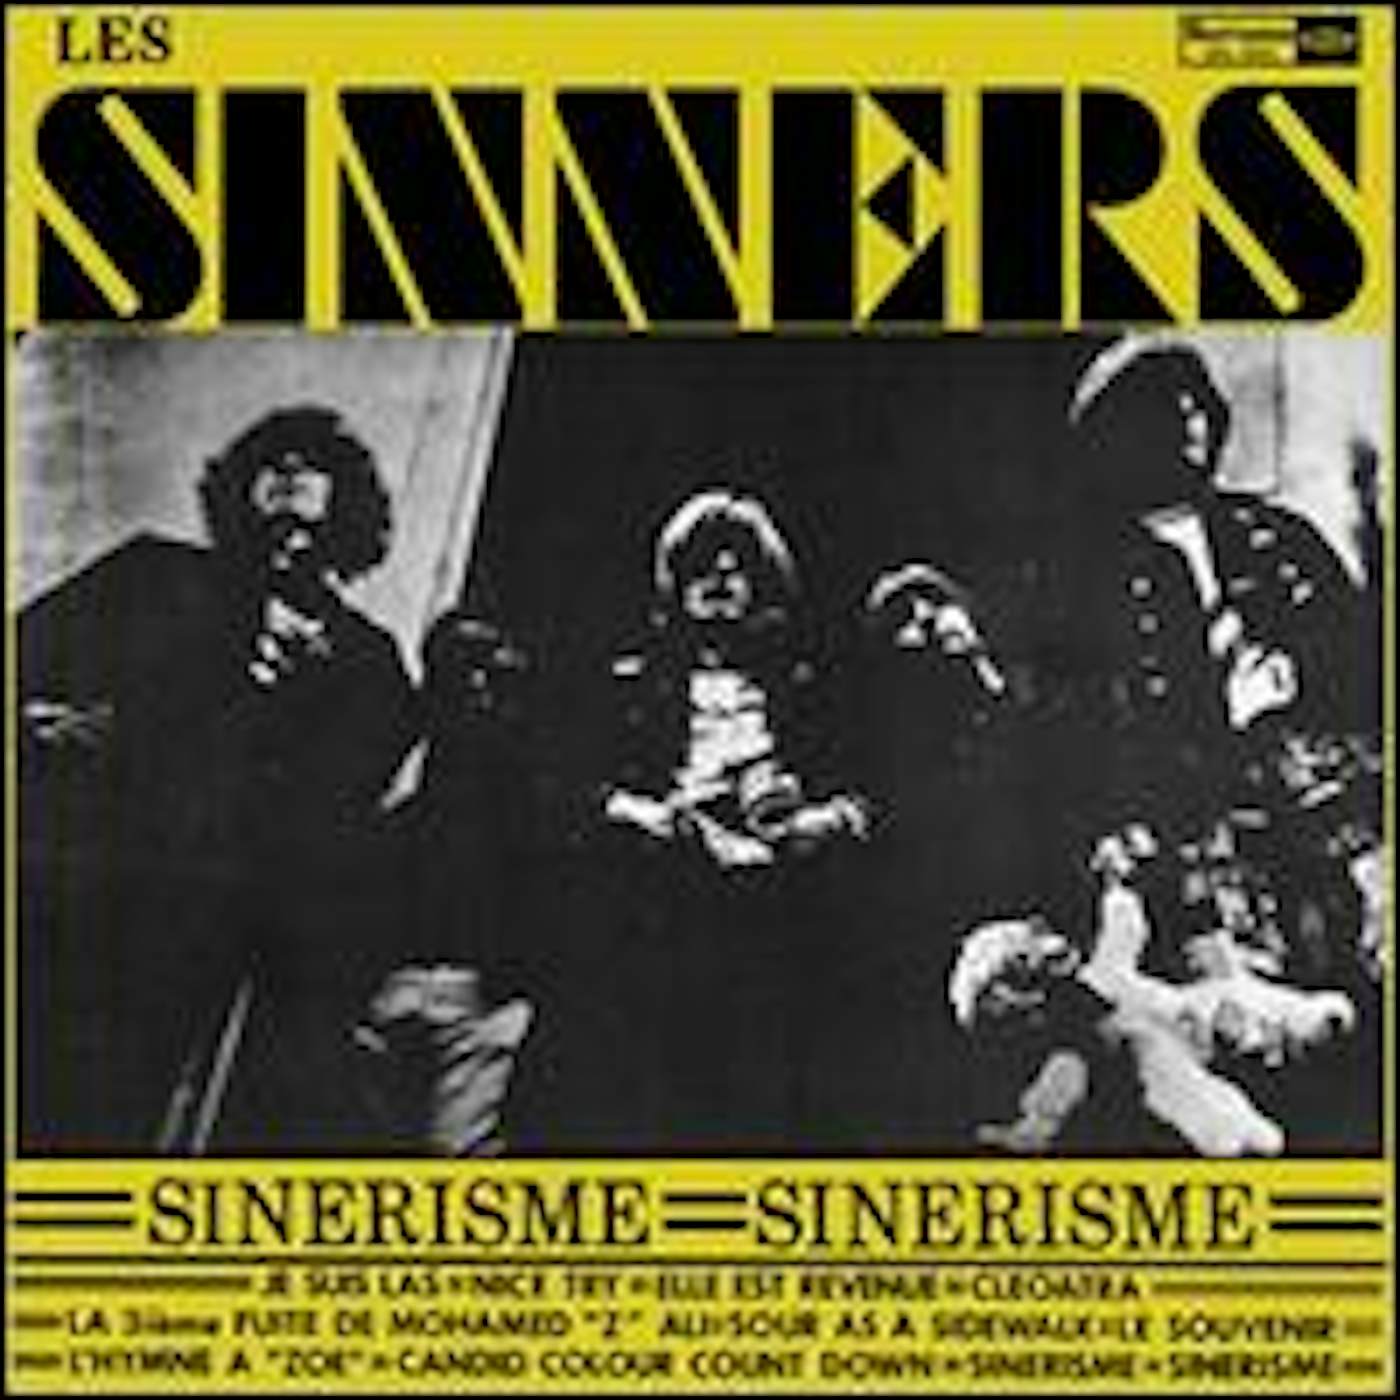 Les Sinners Sinerisme Vinyl Record